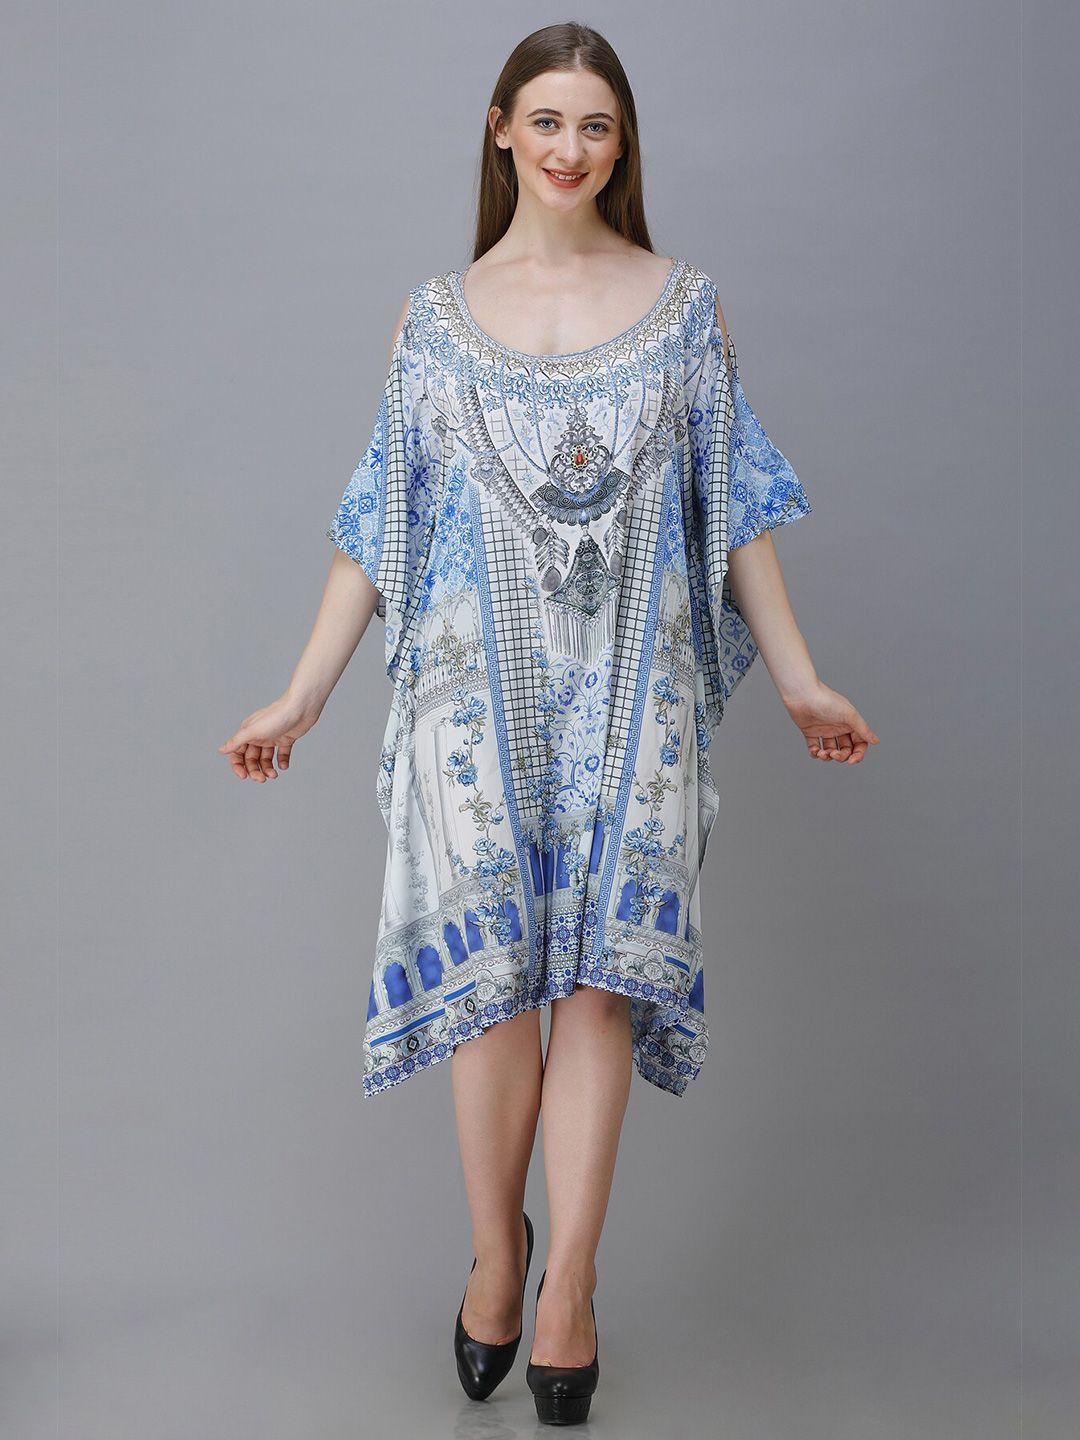 rajoria instyle white & blue ethnic motifs georgette ethnic kaftan midi dress